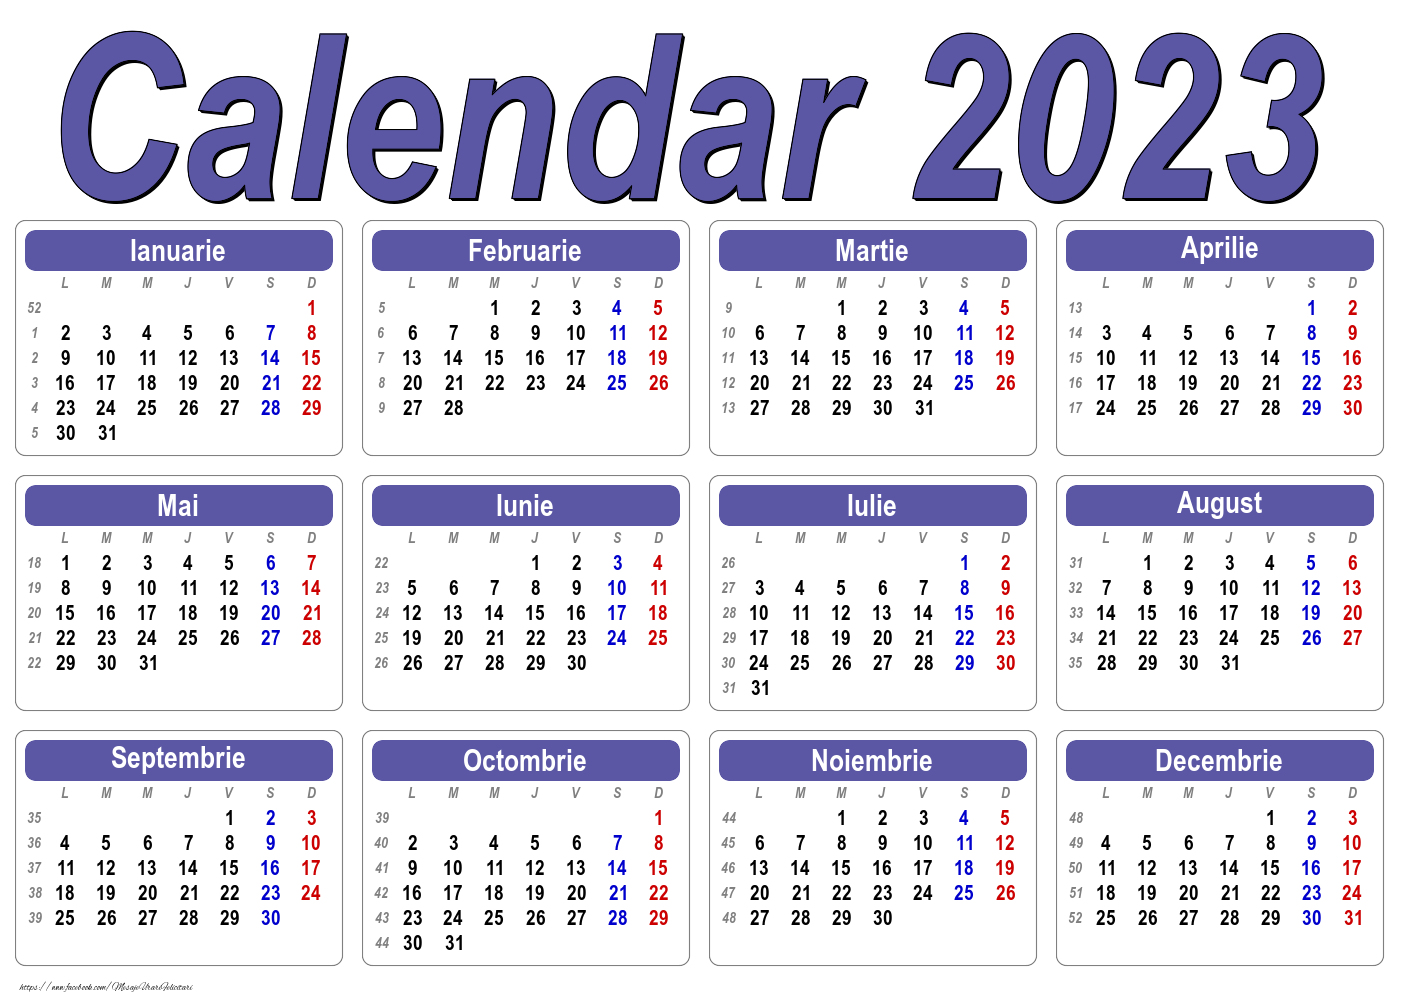 Imagini cu calendare - Calendar 2023 - Clasic - Model 0045 - mesajeurarifelicitari.com